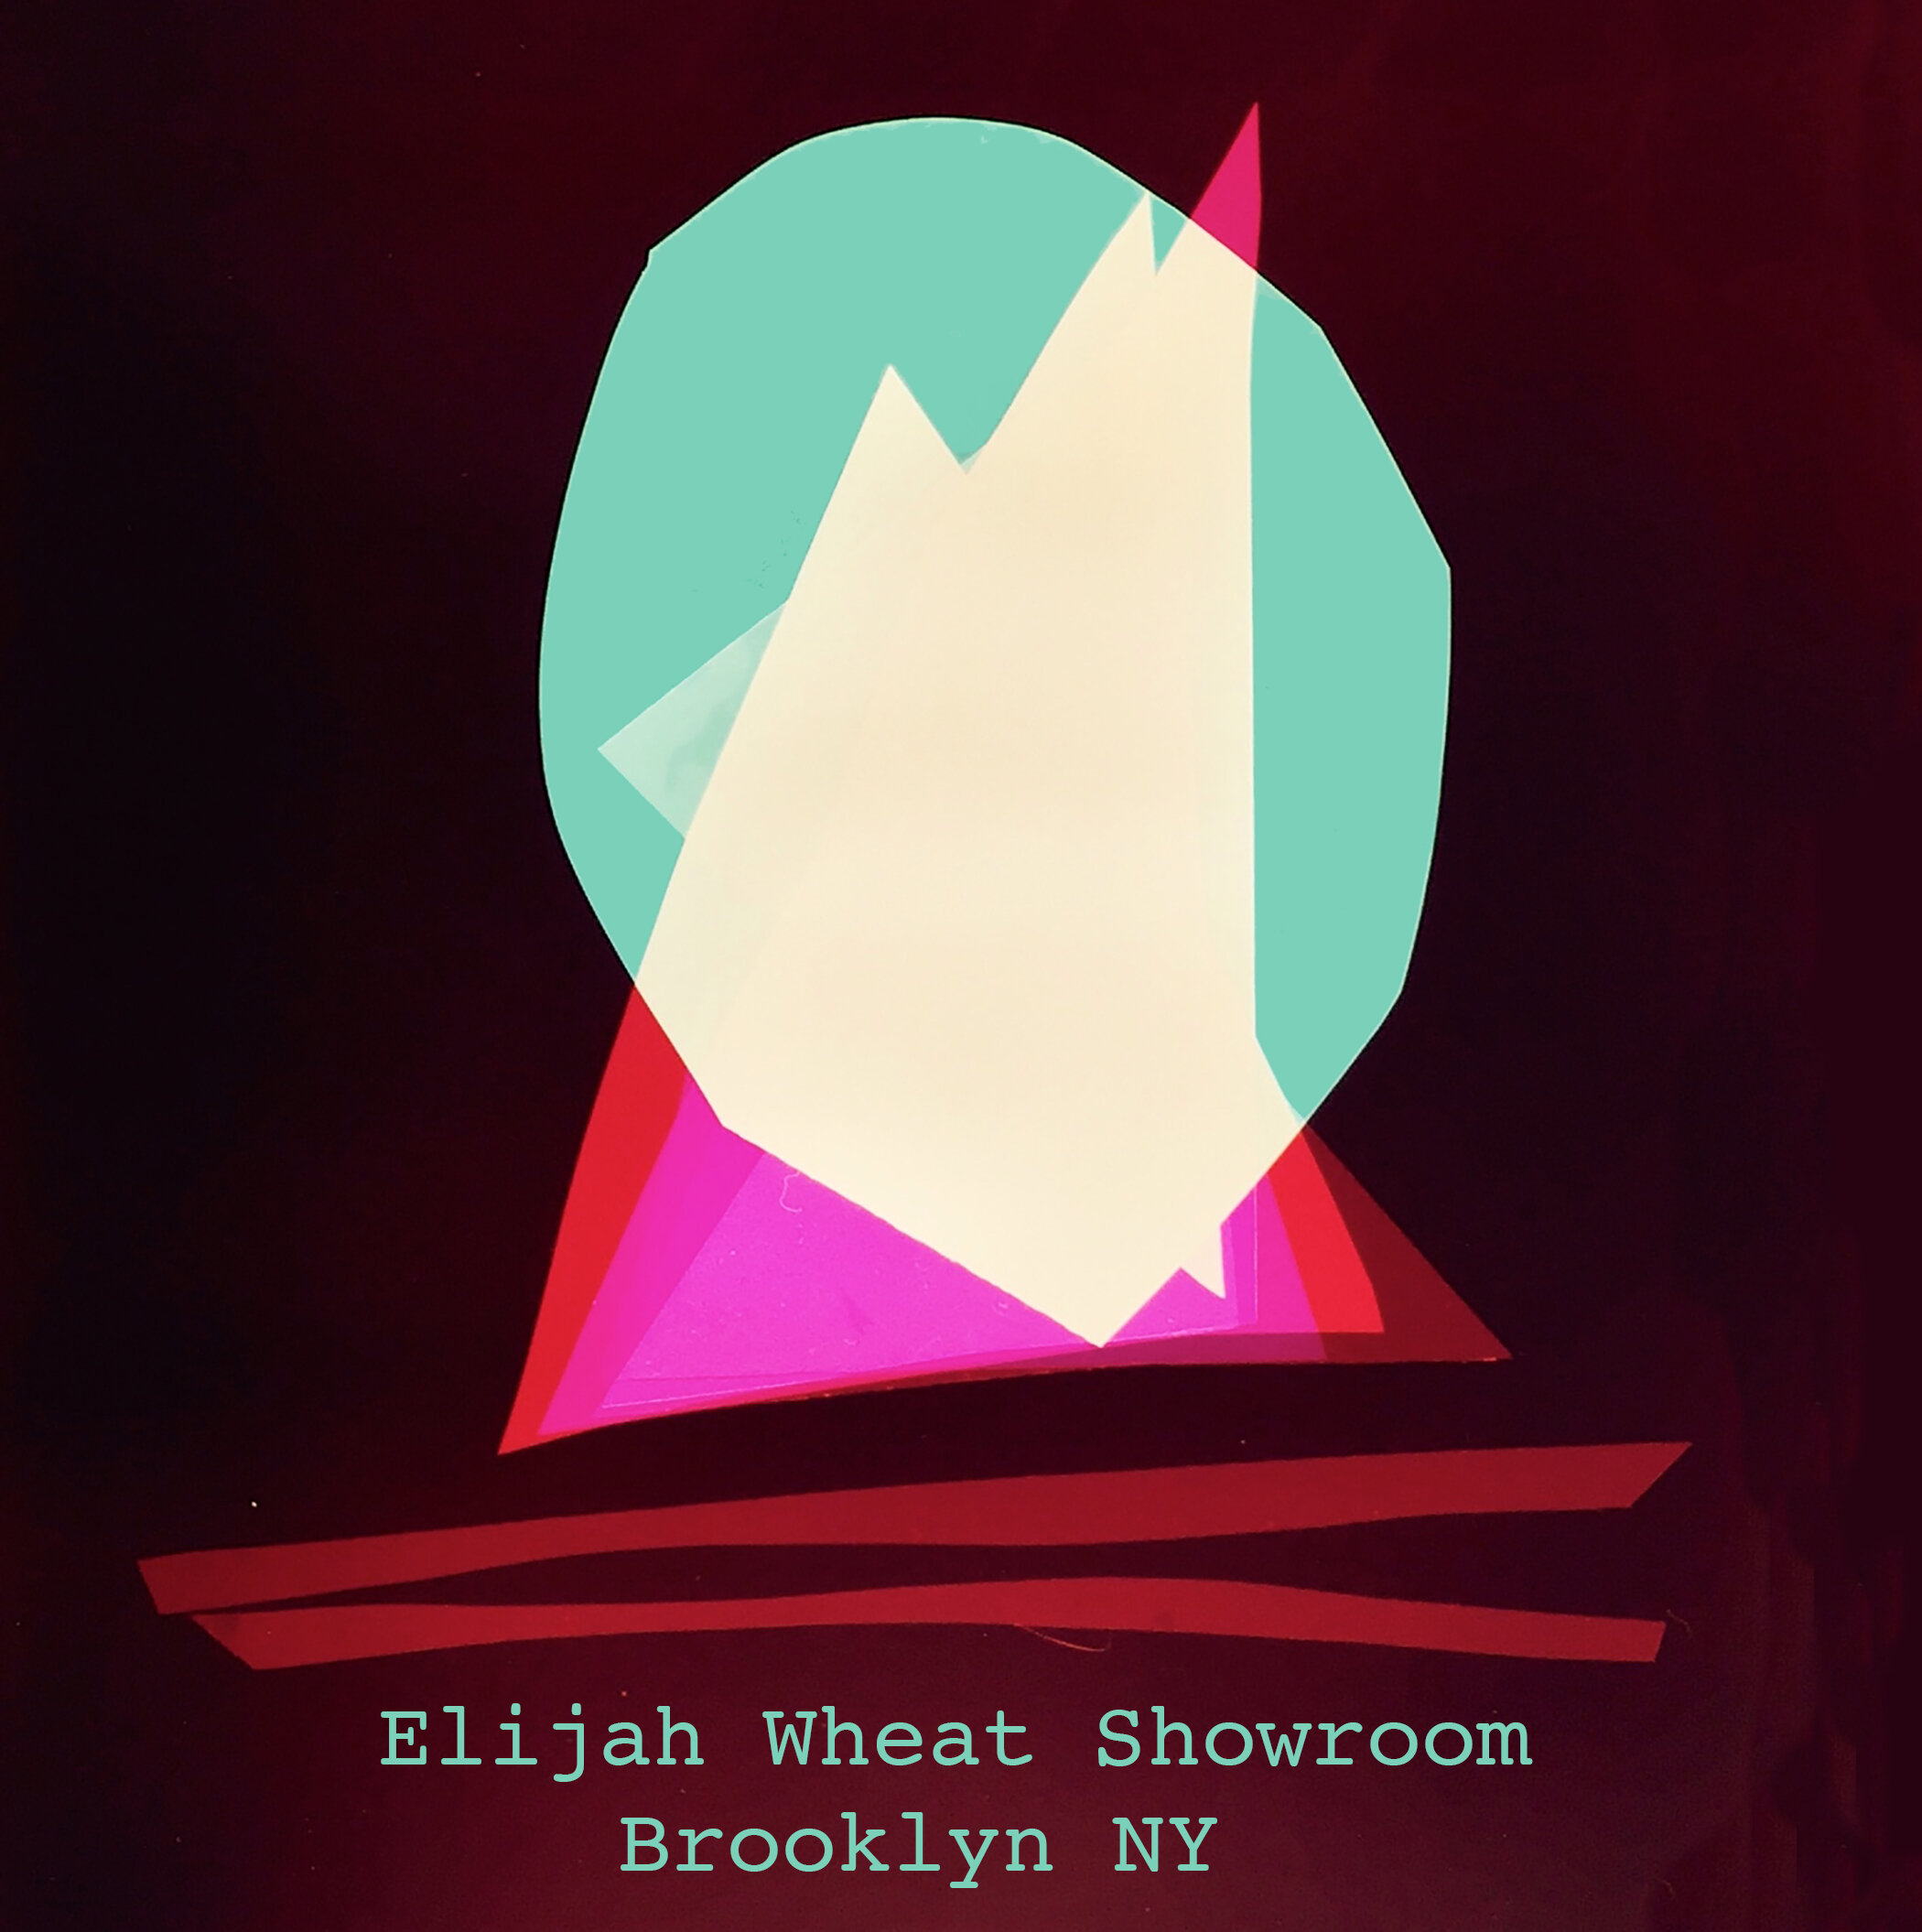 Elijah Wheat Showroom image